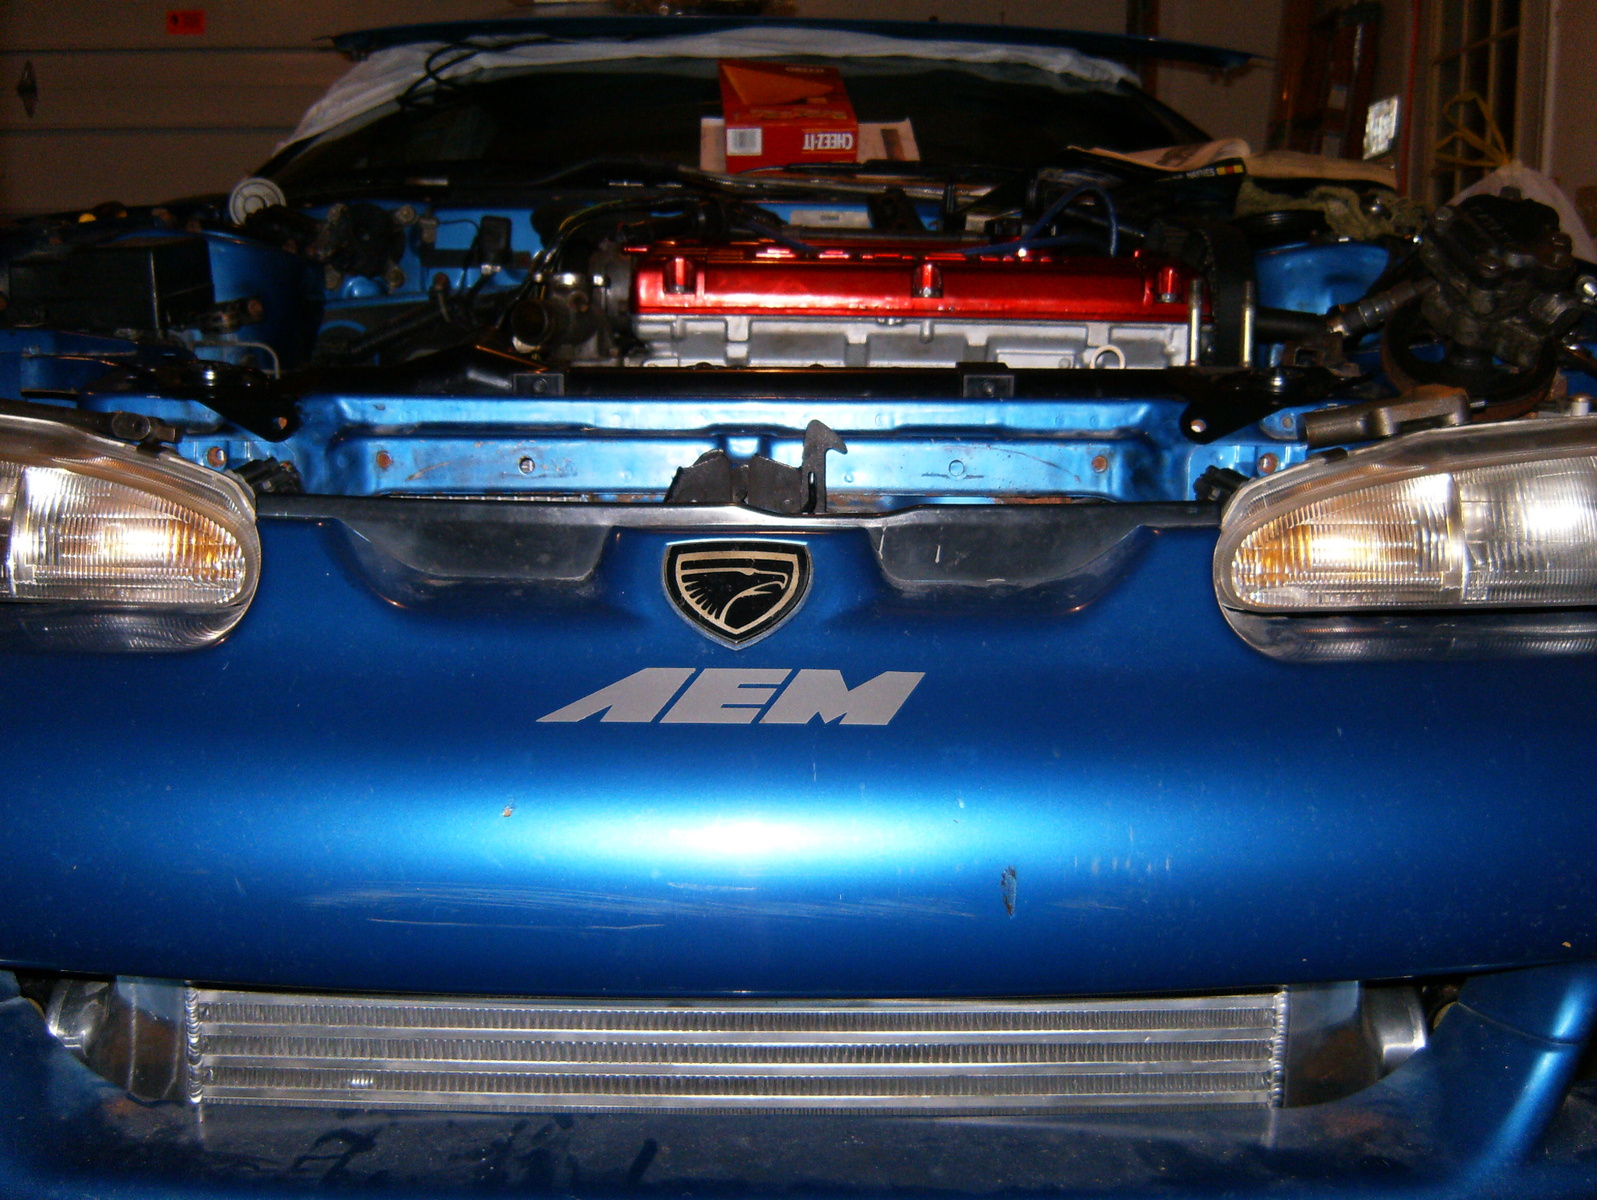 Chrysler LE Baron 2.5 i Turbo AT